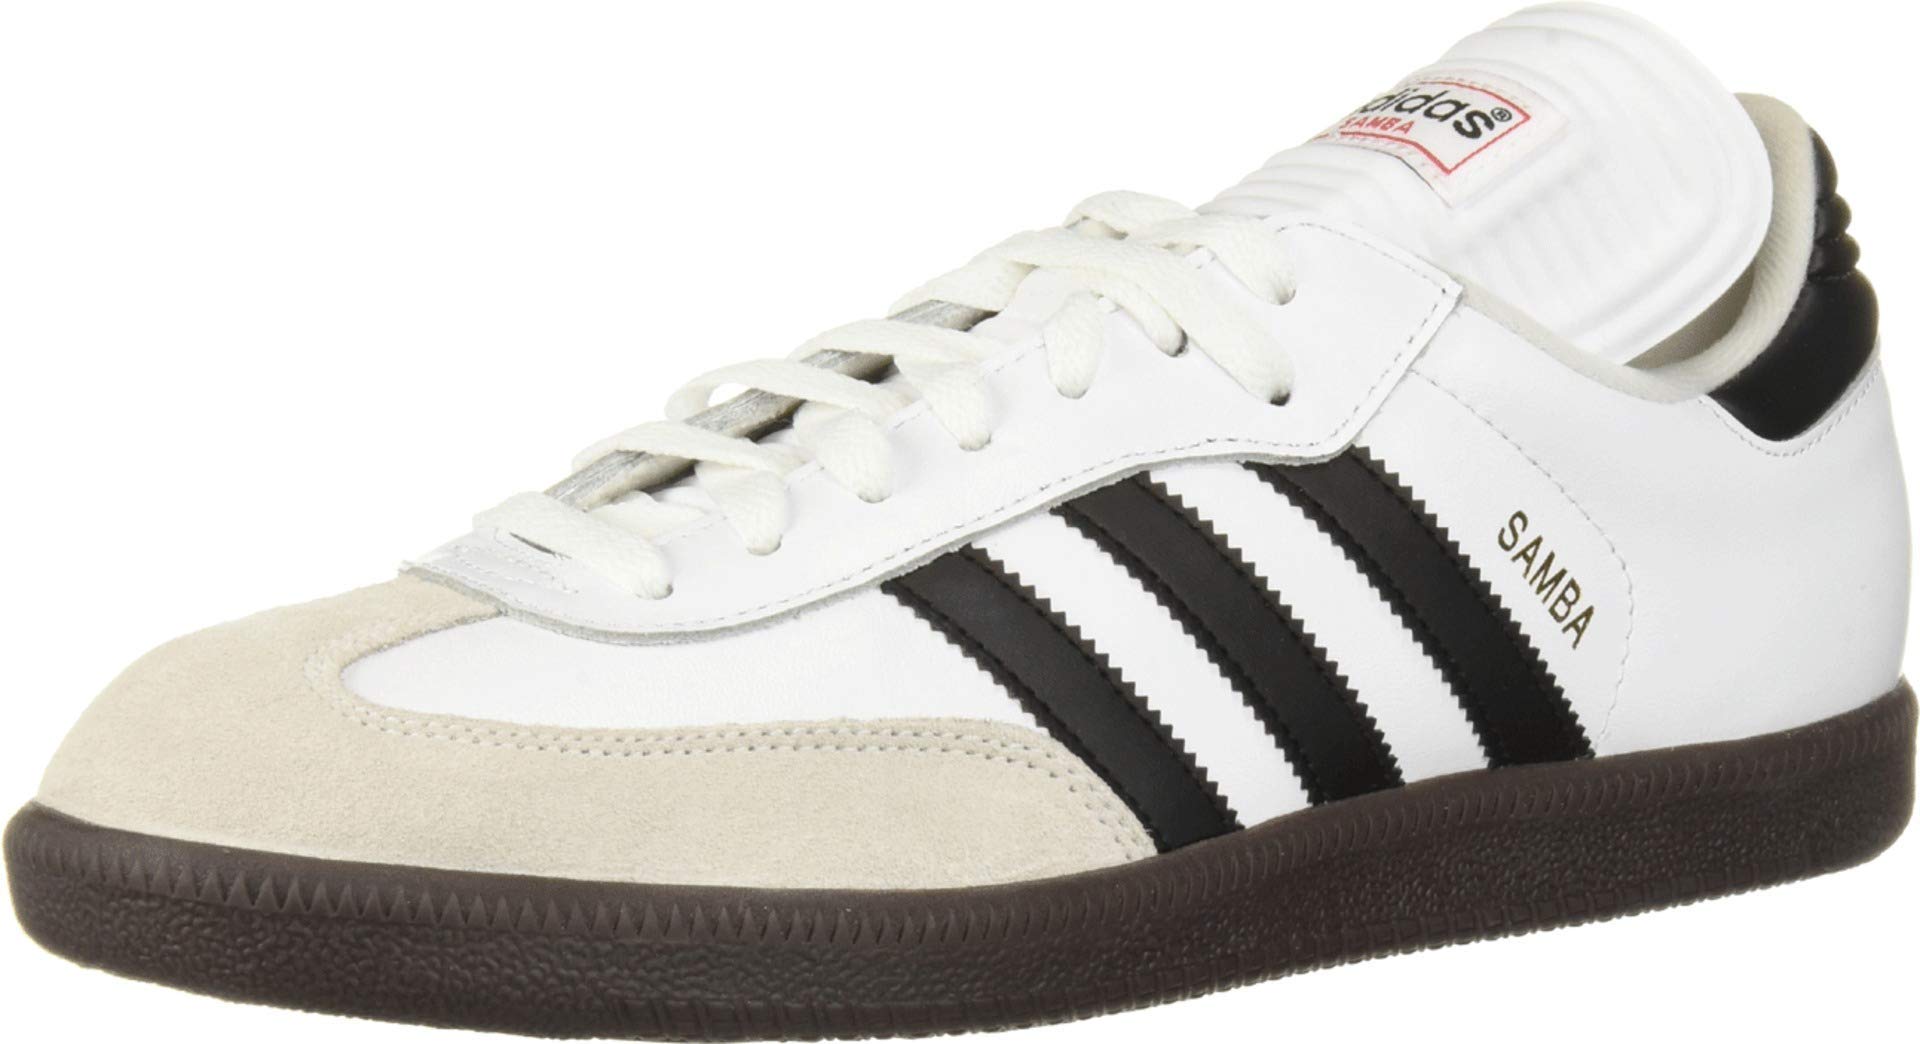 adidas Men's Samba Classic Soccer Shoe, white/black/white, 11 M US $62.99